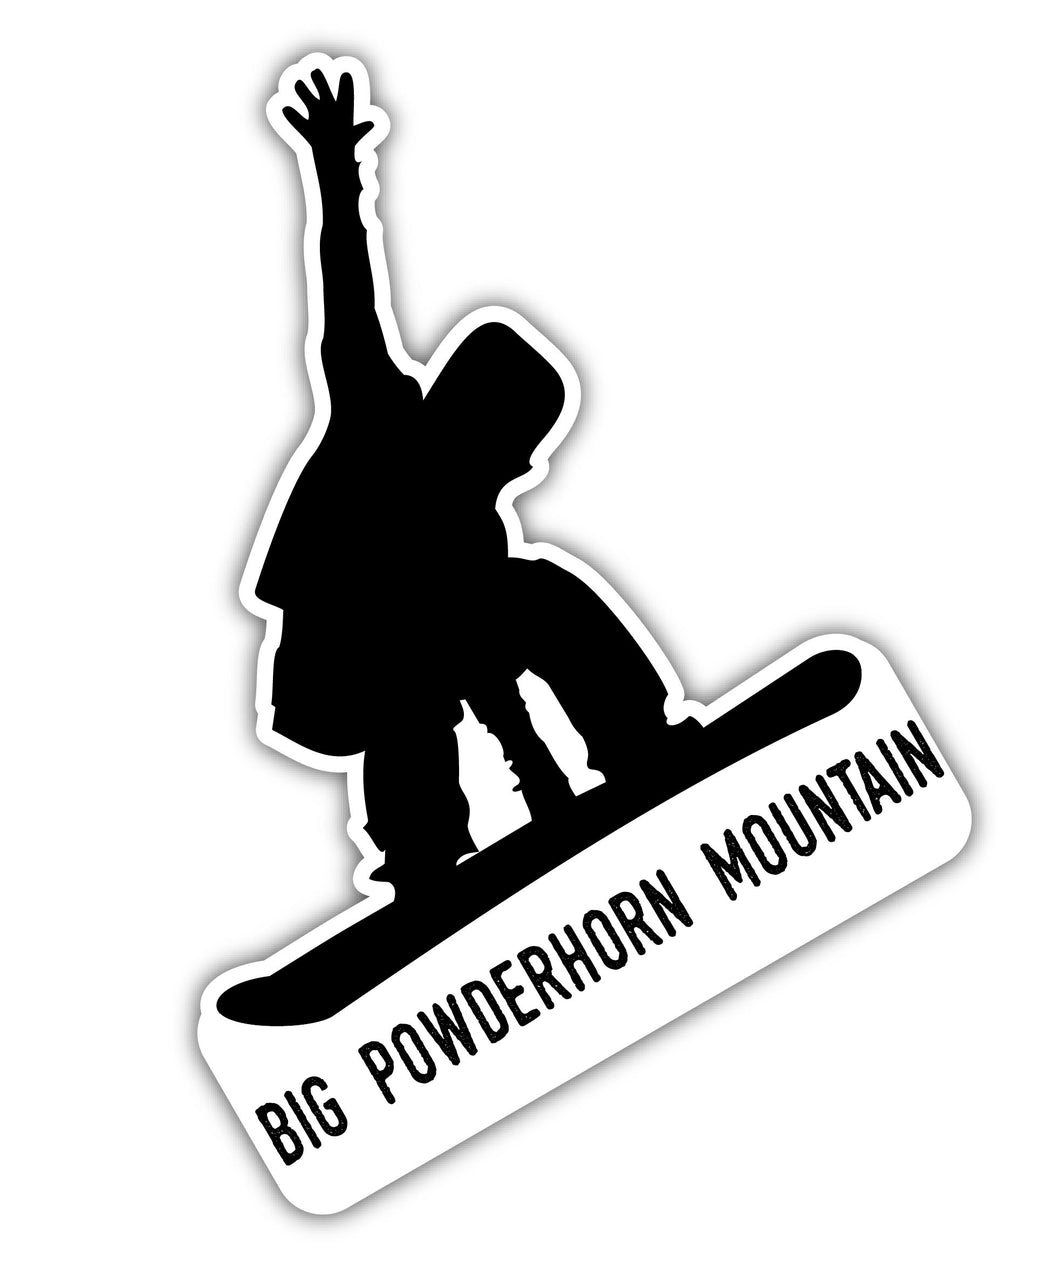 Big Powderhorn Mountain Michigan Ski Adventures Souvenir 4 Inch Vinyl Decal Sticker Board Design